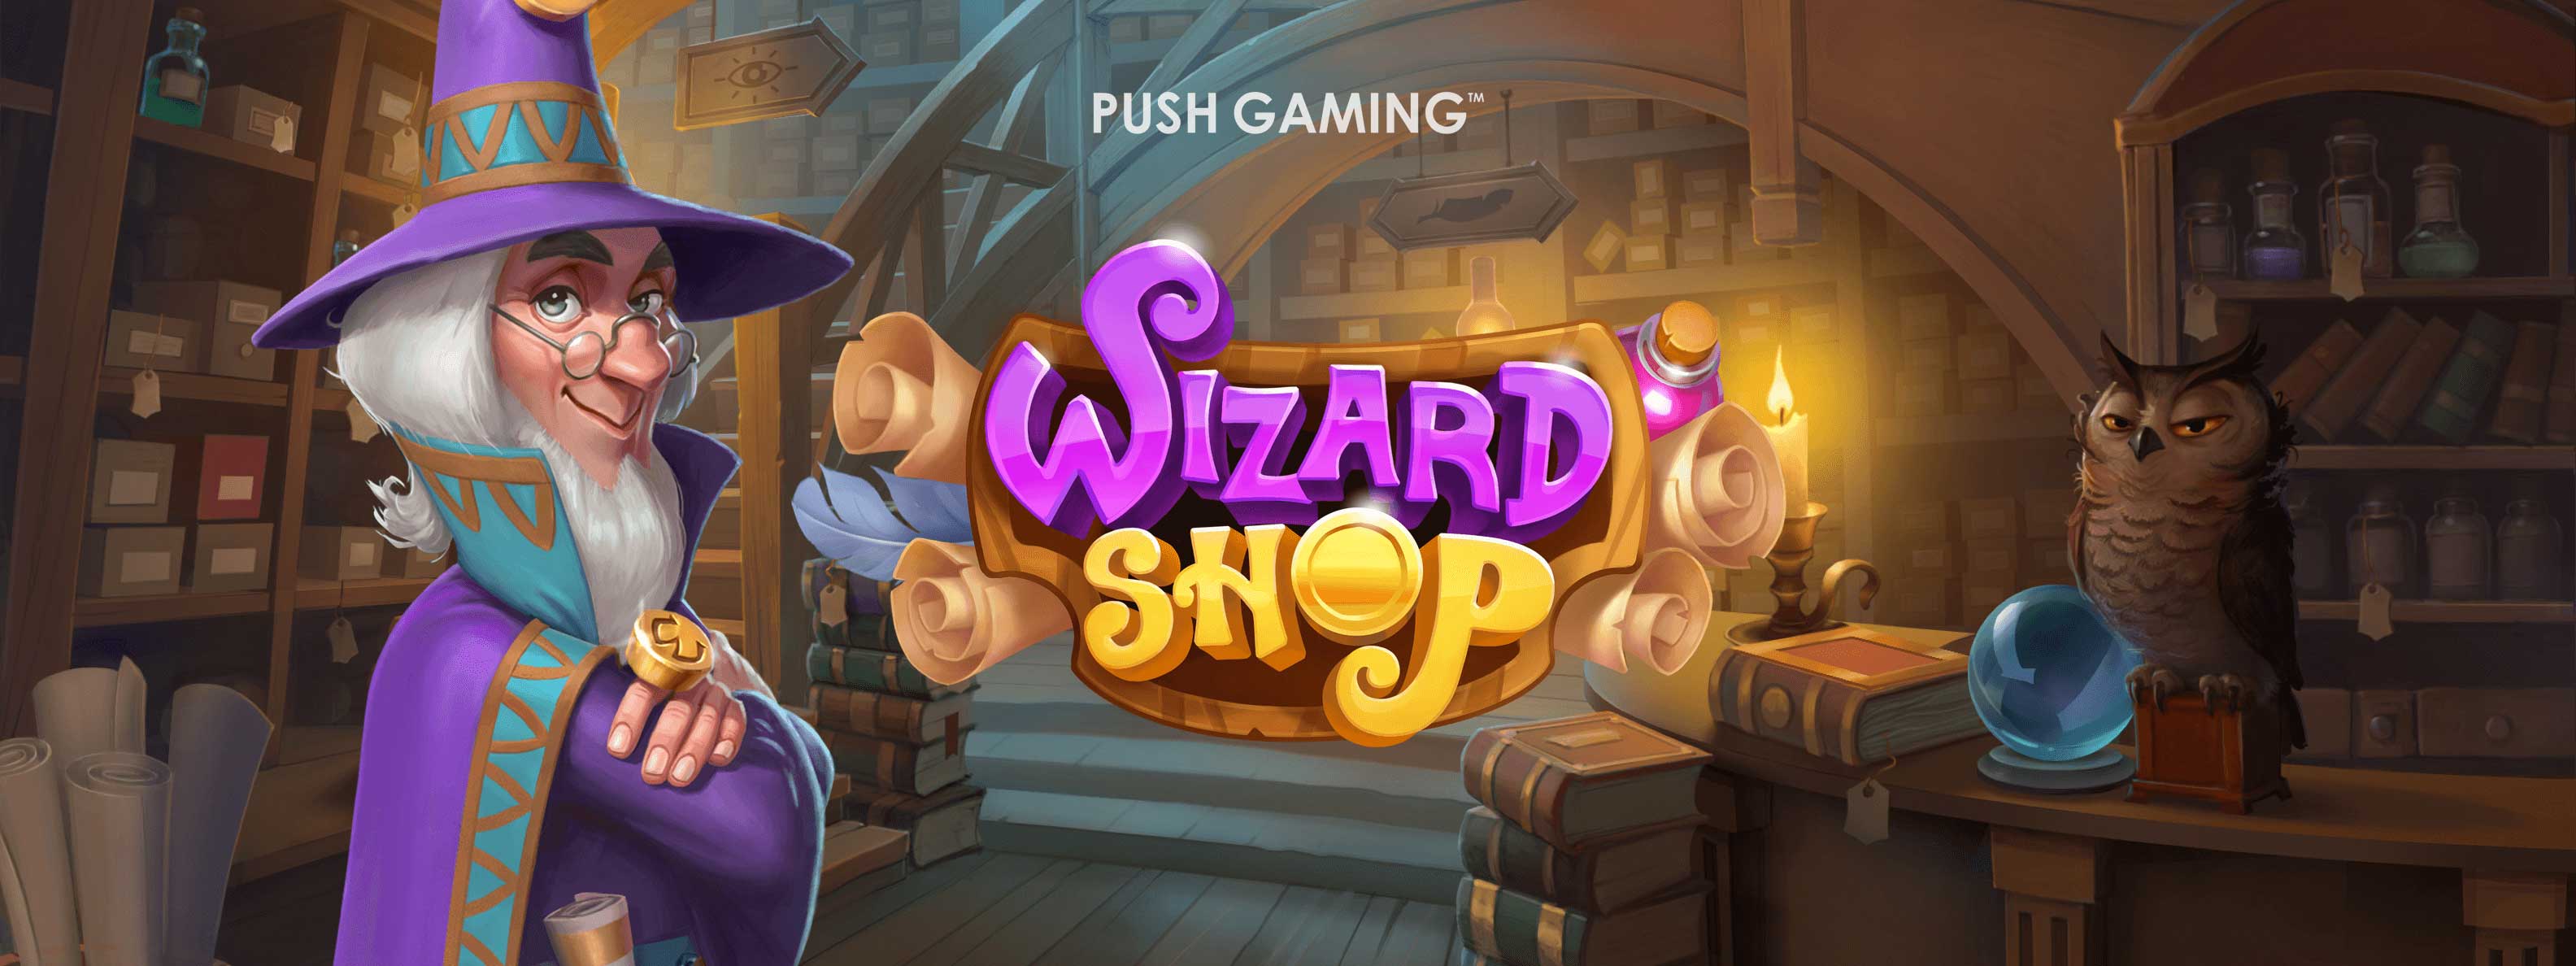 Lazy wizard. Wizard shop. Норск игра. Wizard8141. The Wizard Shoppe.